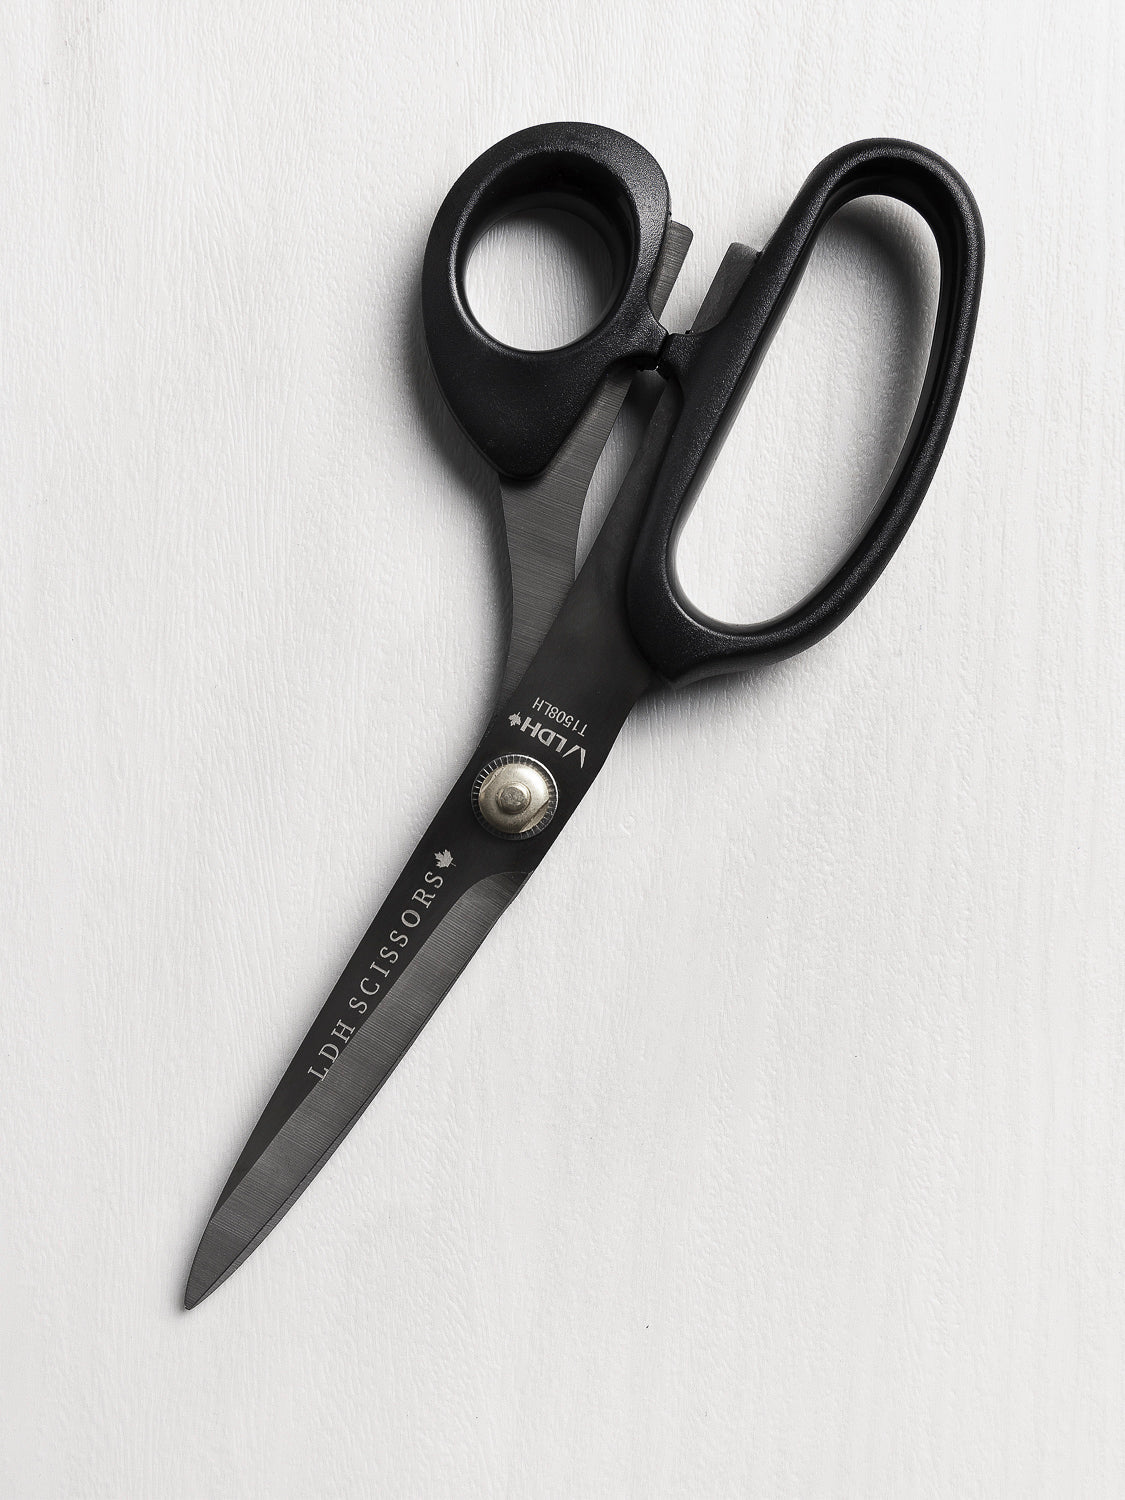 True Left-Handed 8 Black Lightweight LDH Scissors